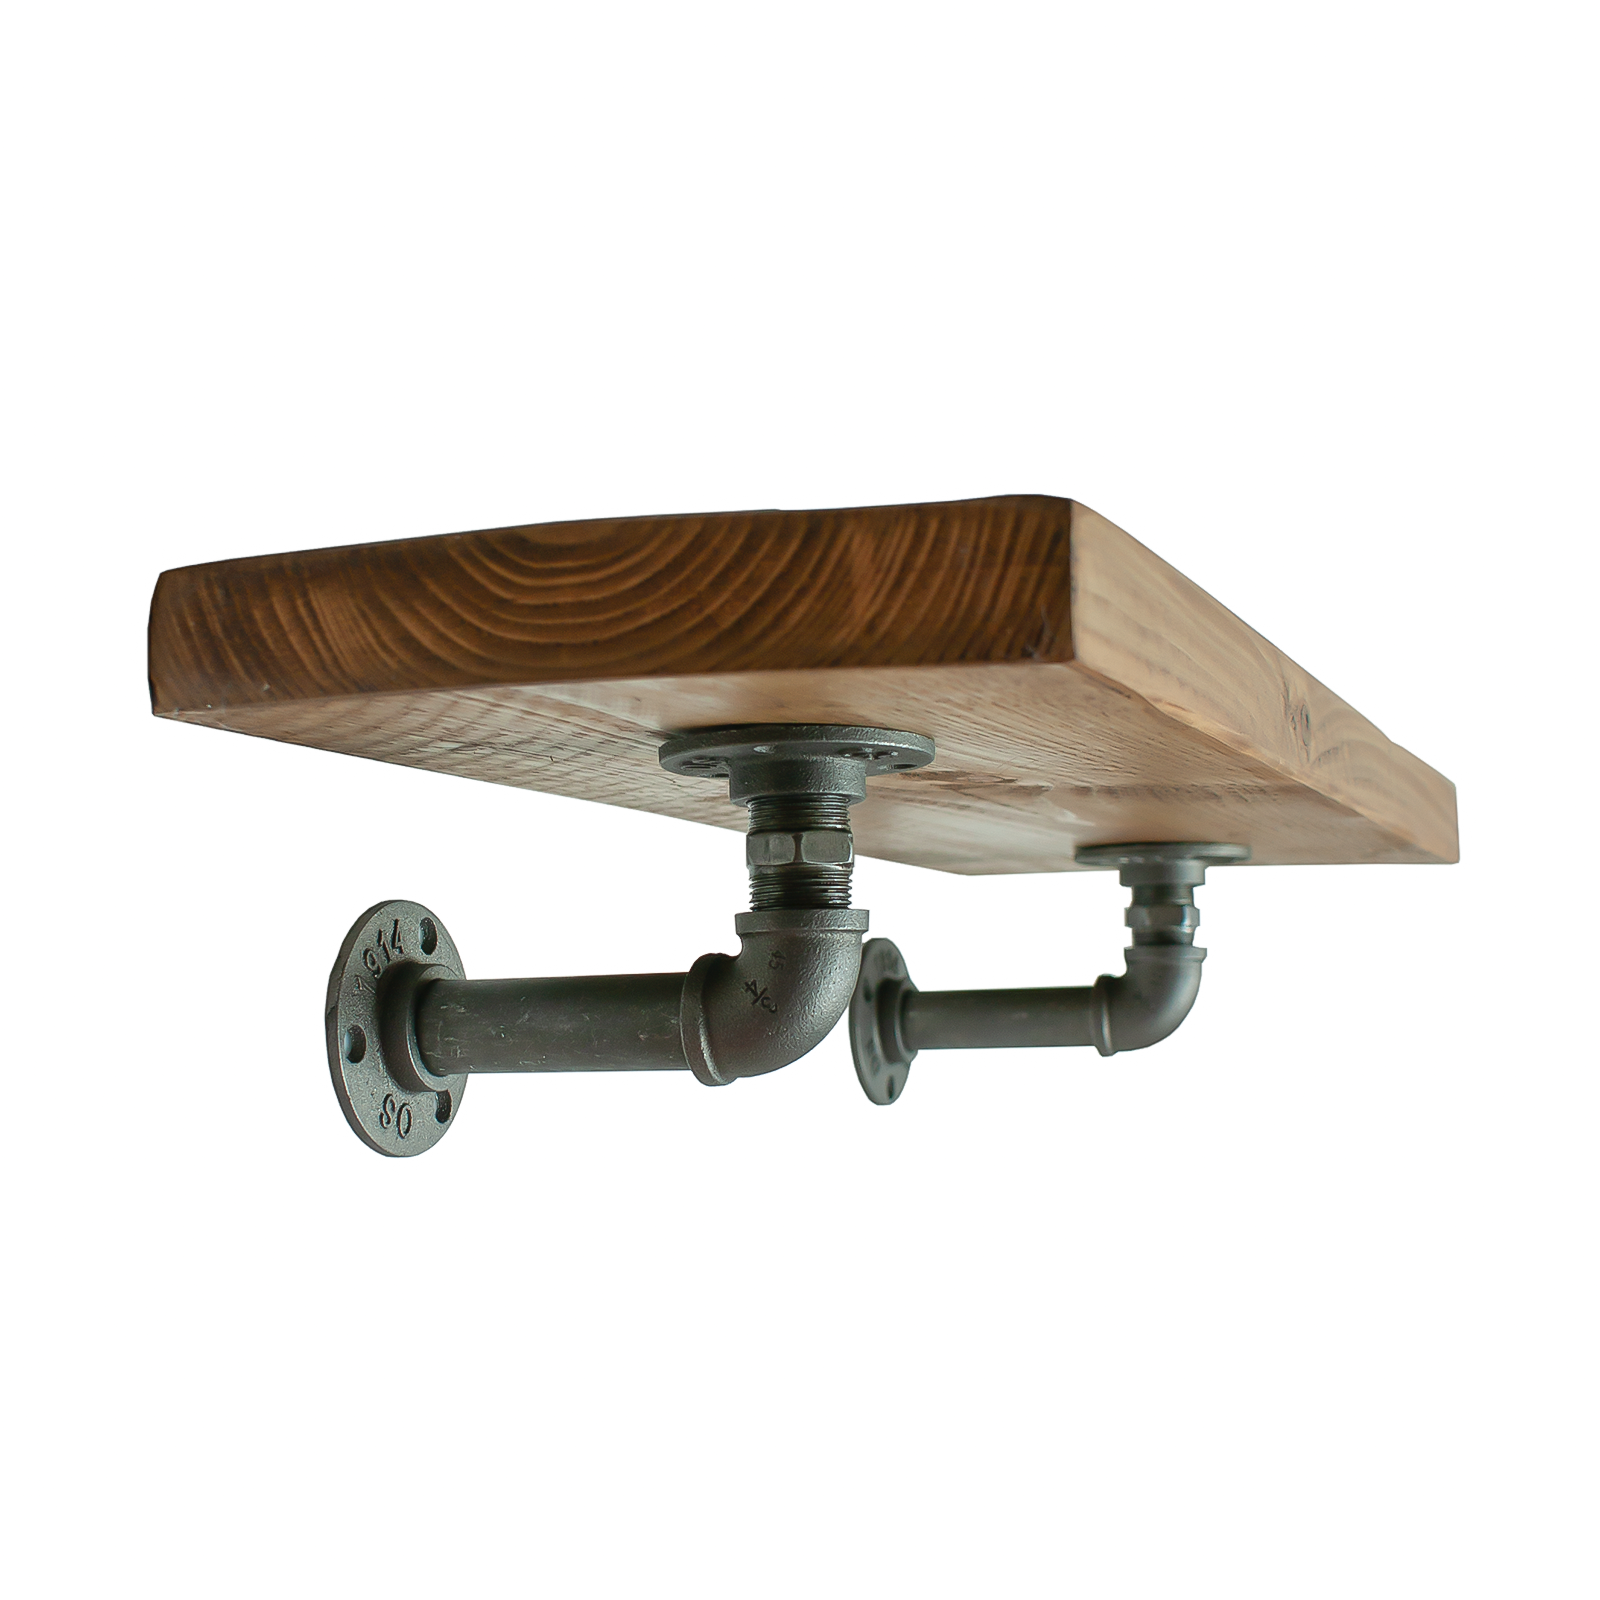 Scaffold Board Shelving - Rustic Solid Wood Shelf, Optional Brackets (SB+)